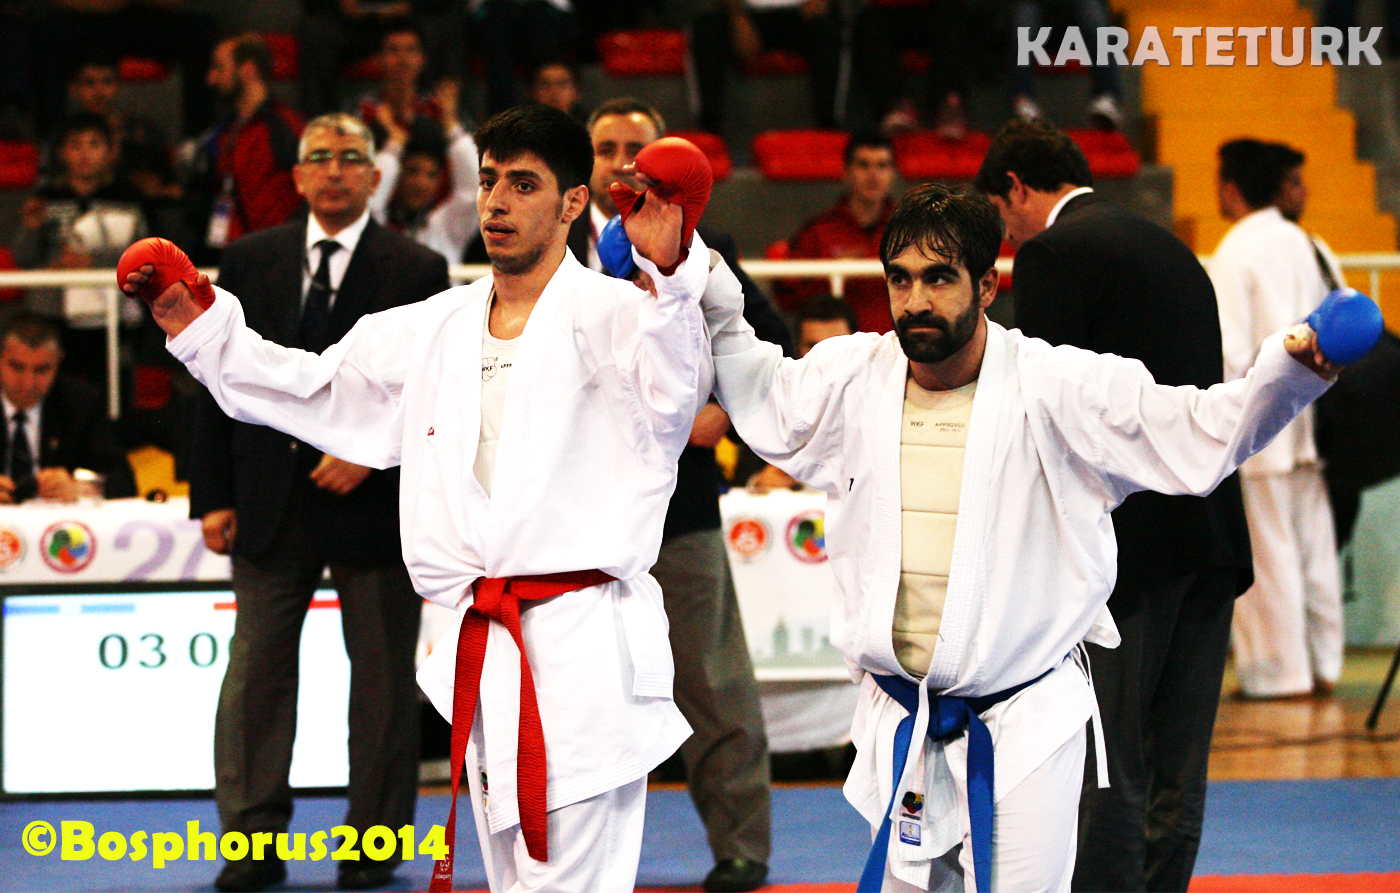 27th Bosphorus Open Karate Tournament